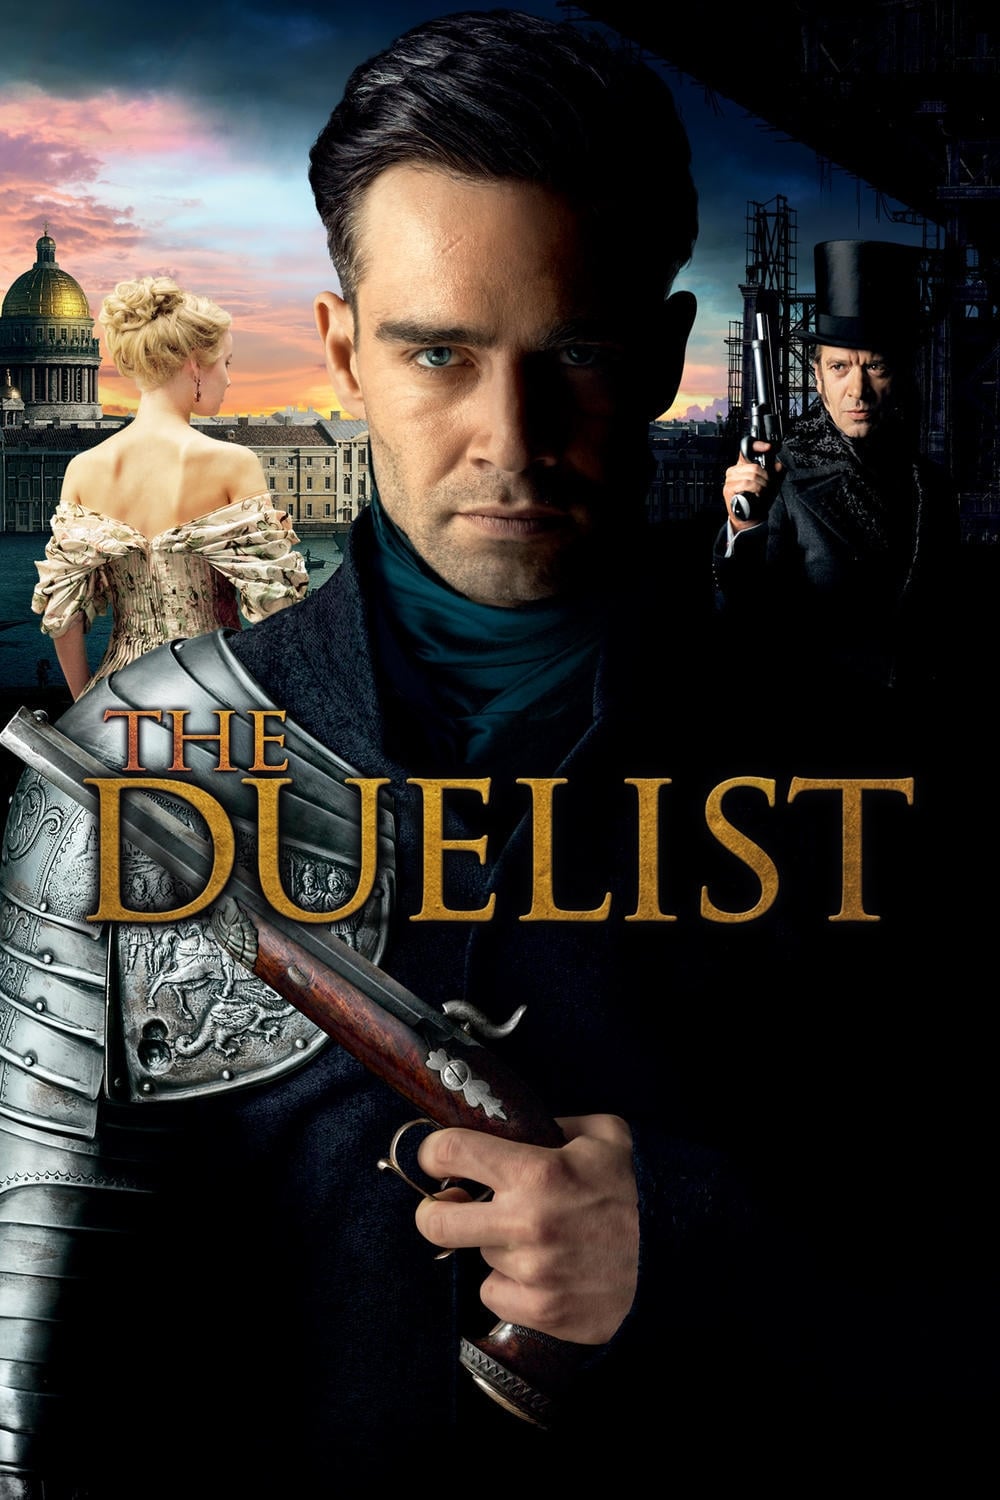 The Duelist (2016)